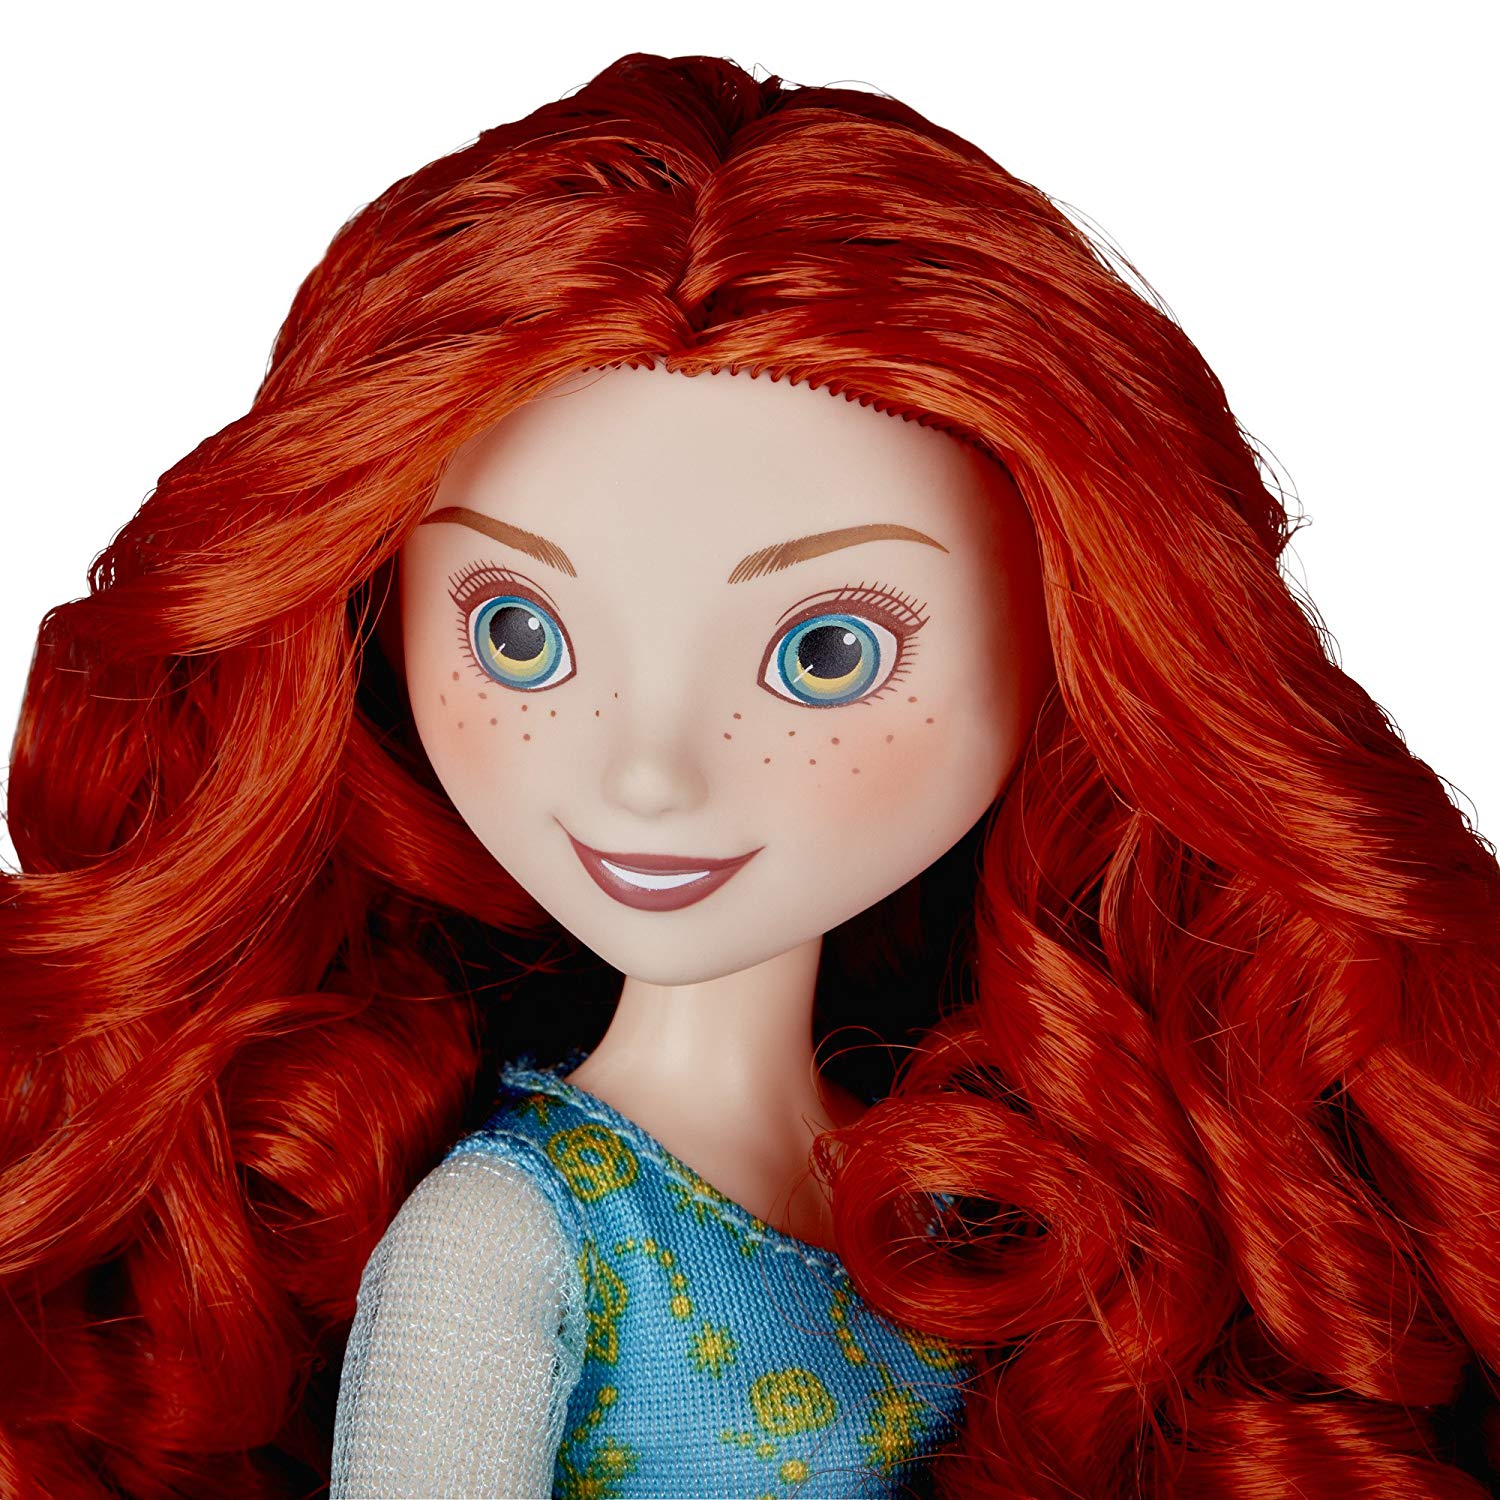 Кукла Disney Princess - Принцесса Мерида, 28 см  